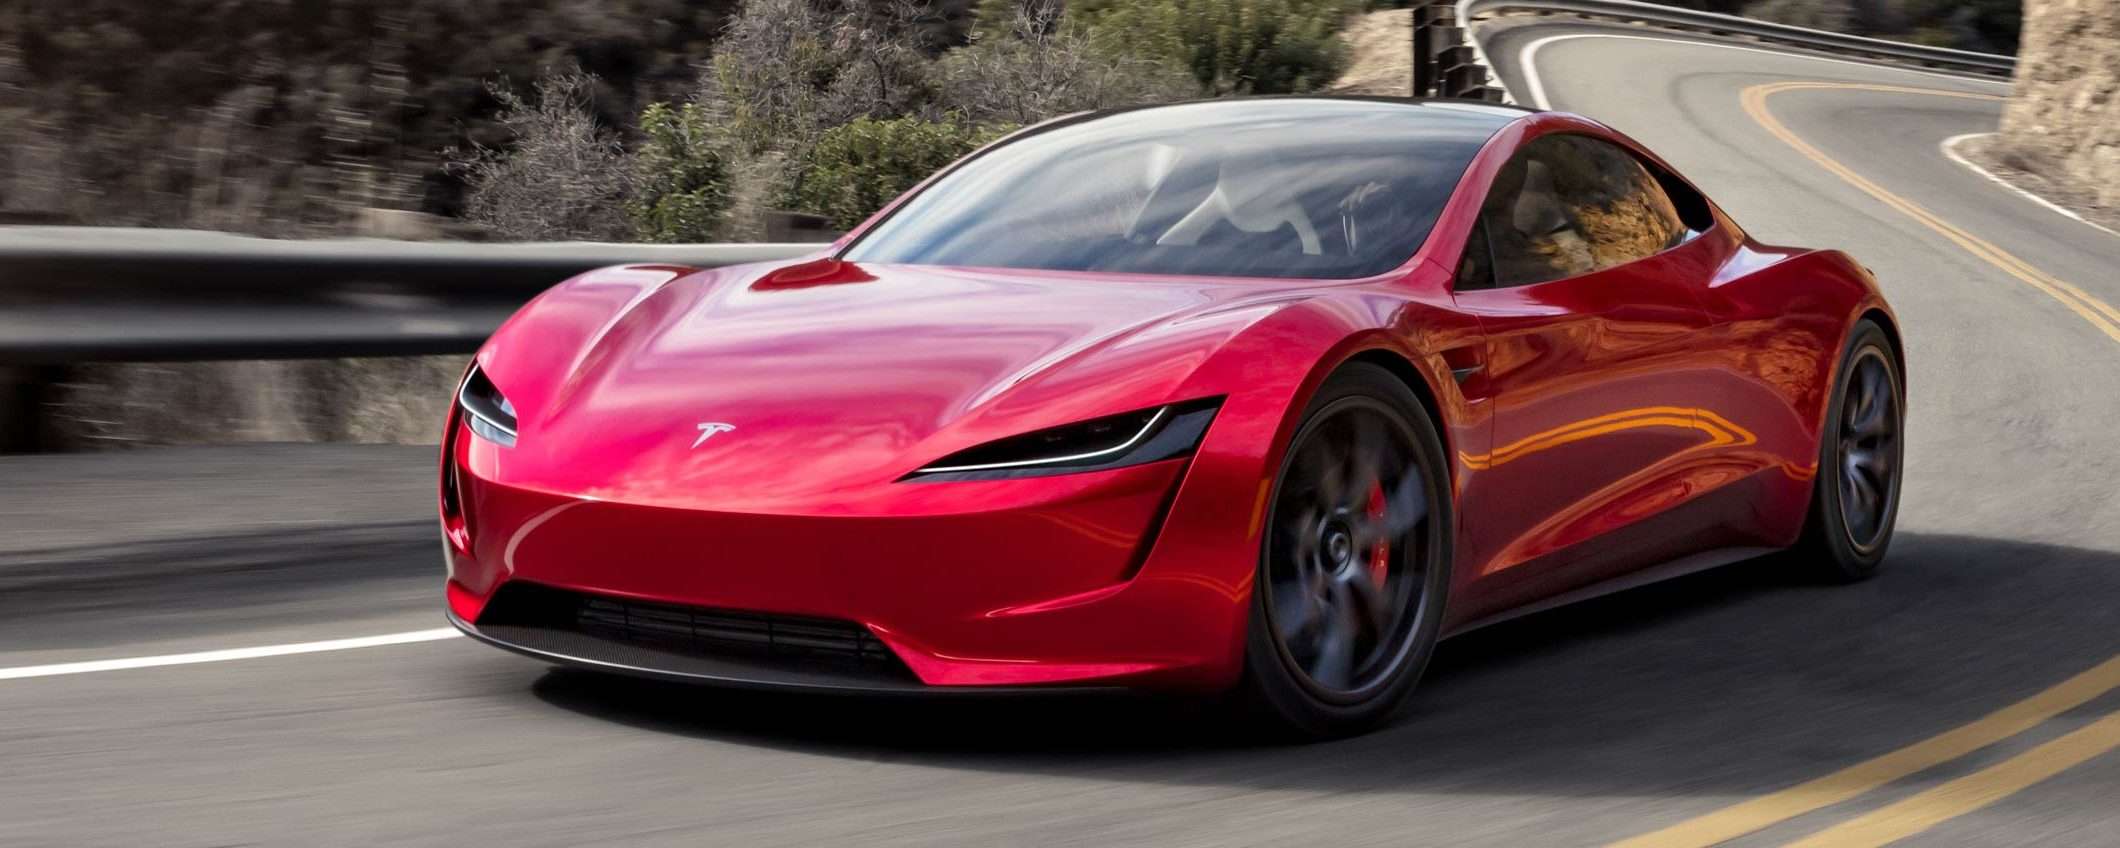 La nuova Tesla Roadster sarà una macchina volante